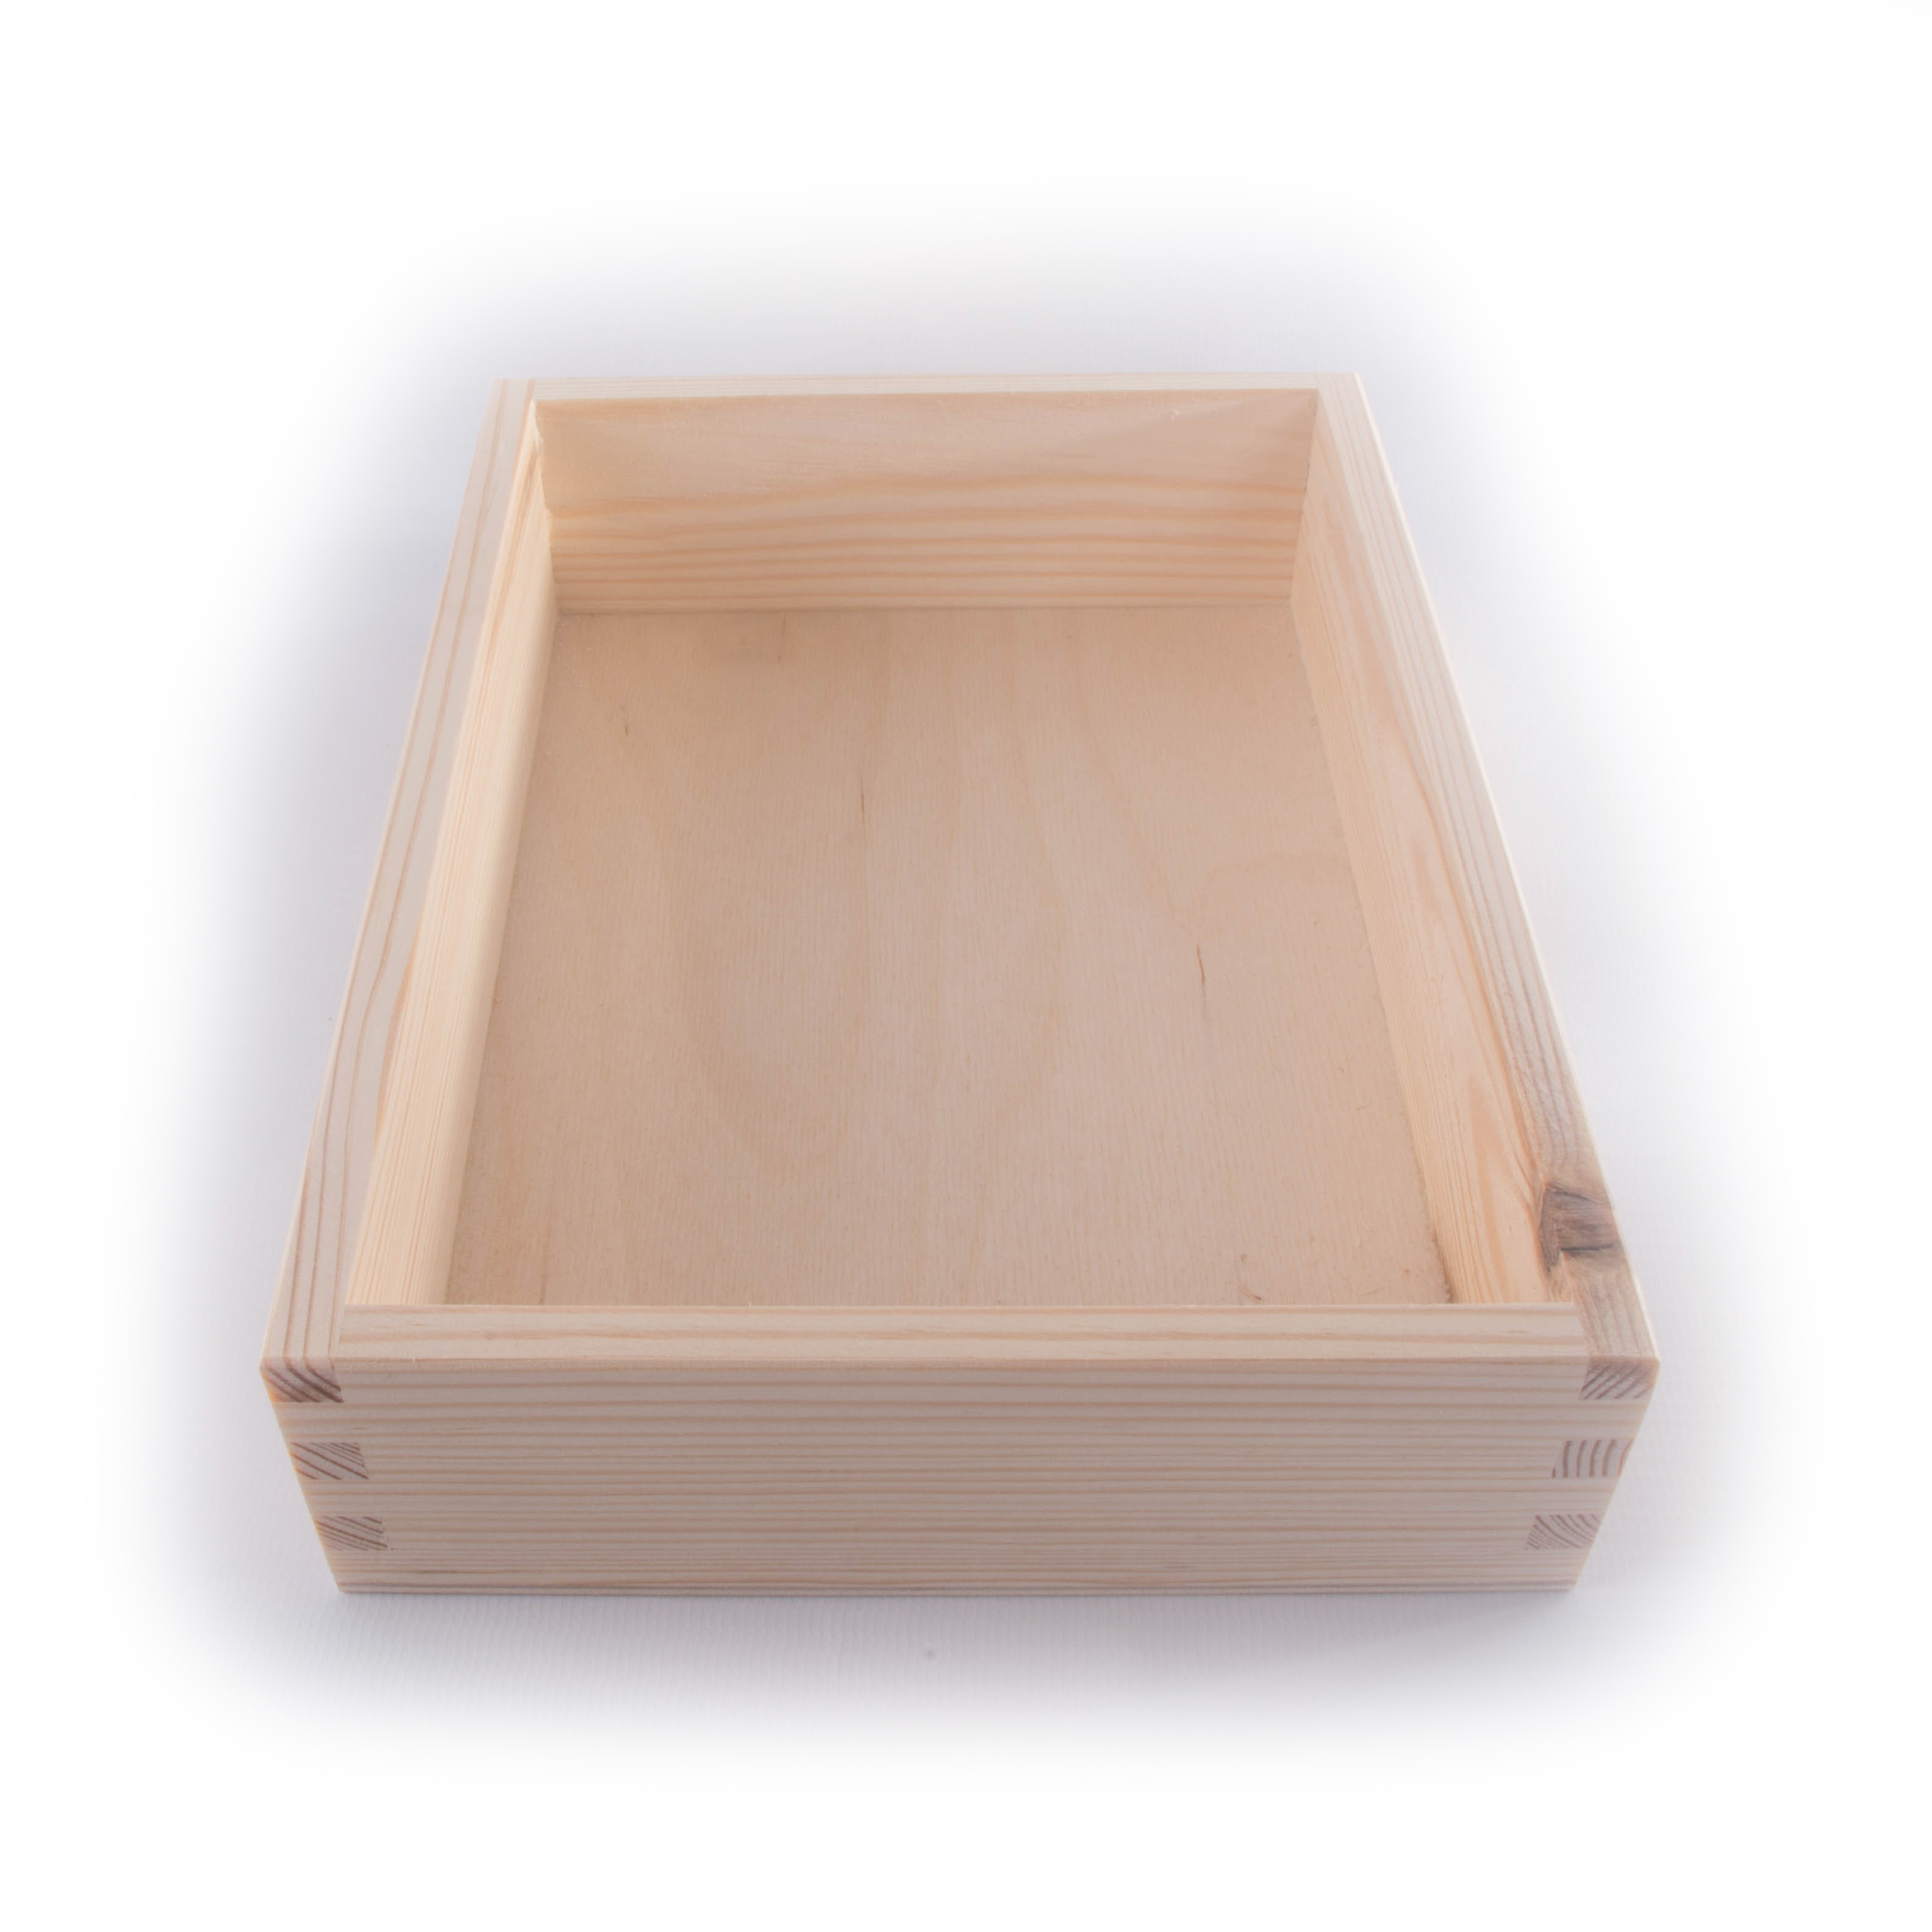 Rectangular Wooden Open Top Box / 22x16x5.4cm Non-Lidded Pine Tray ...